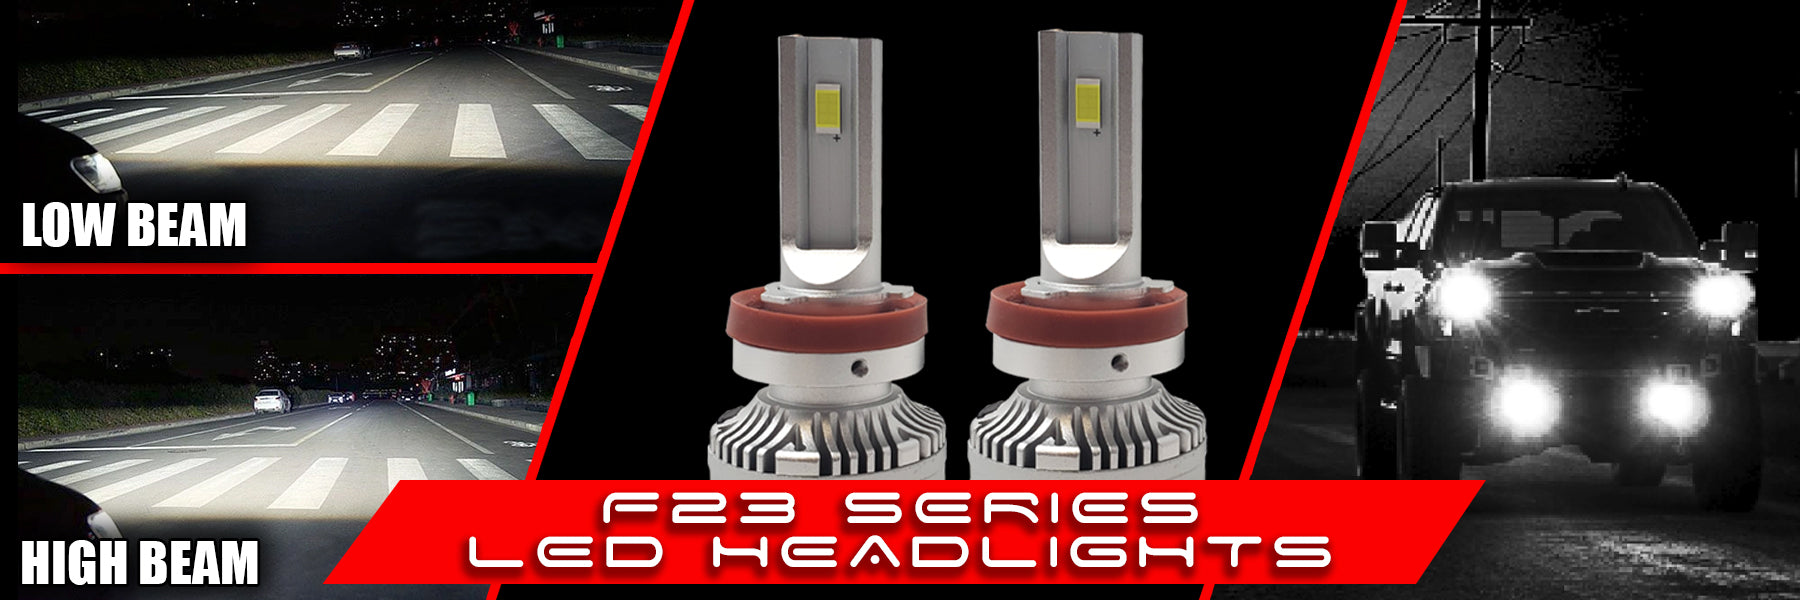 100W remote control headlights search lights car truck boat headlights